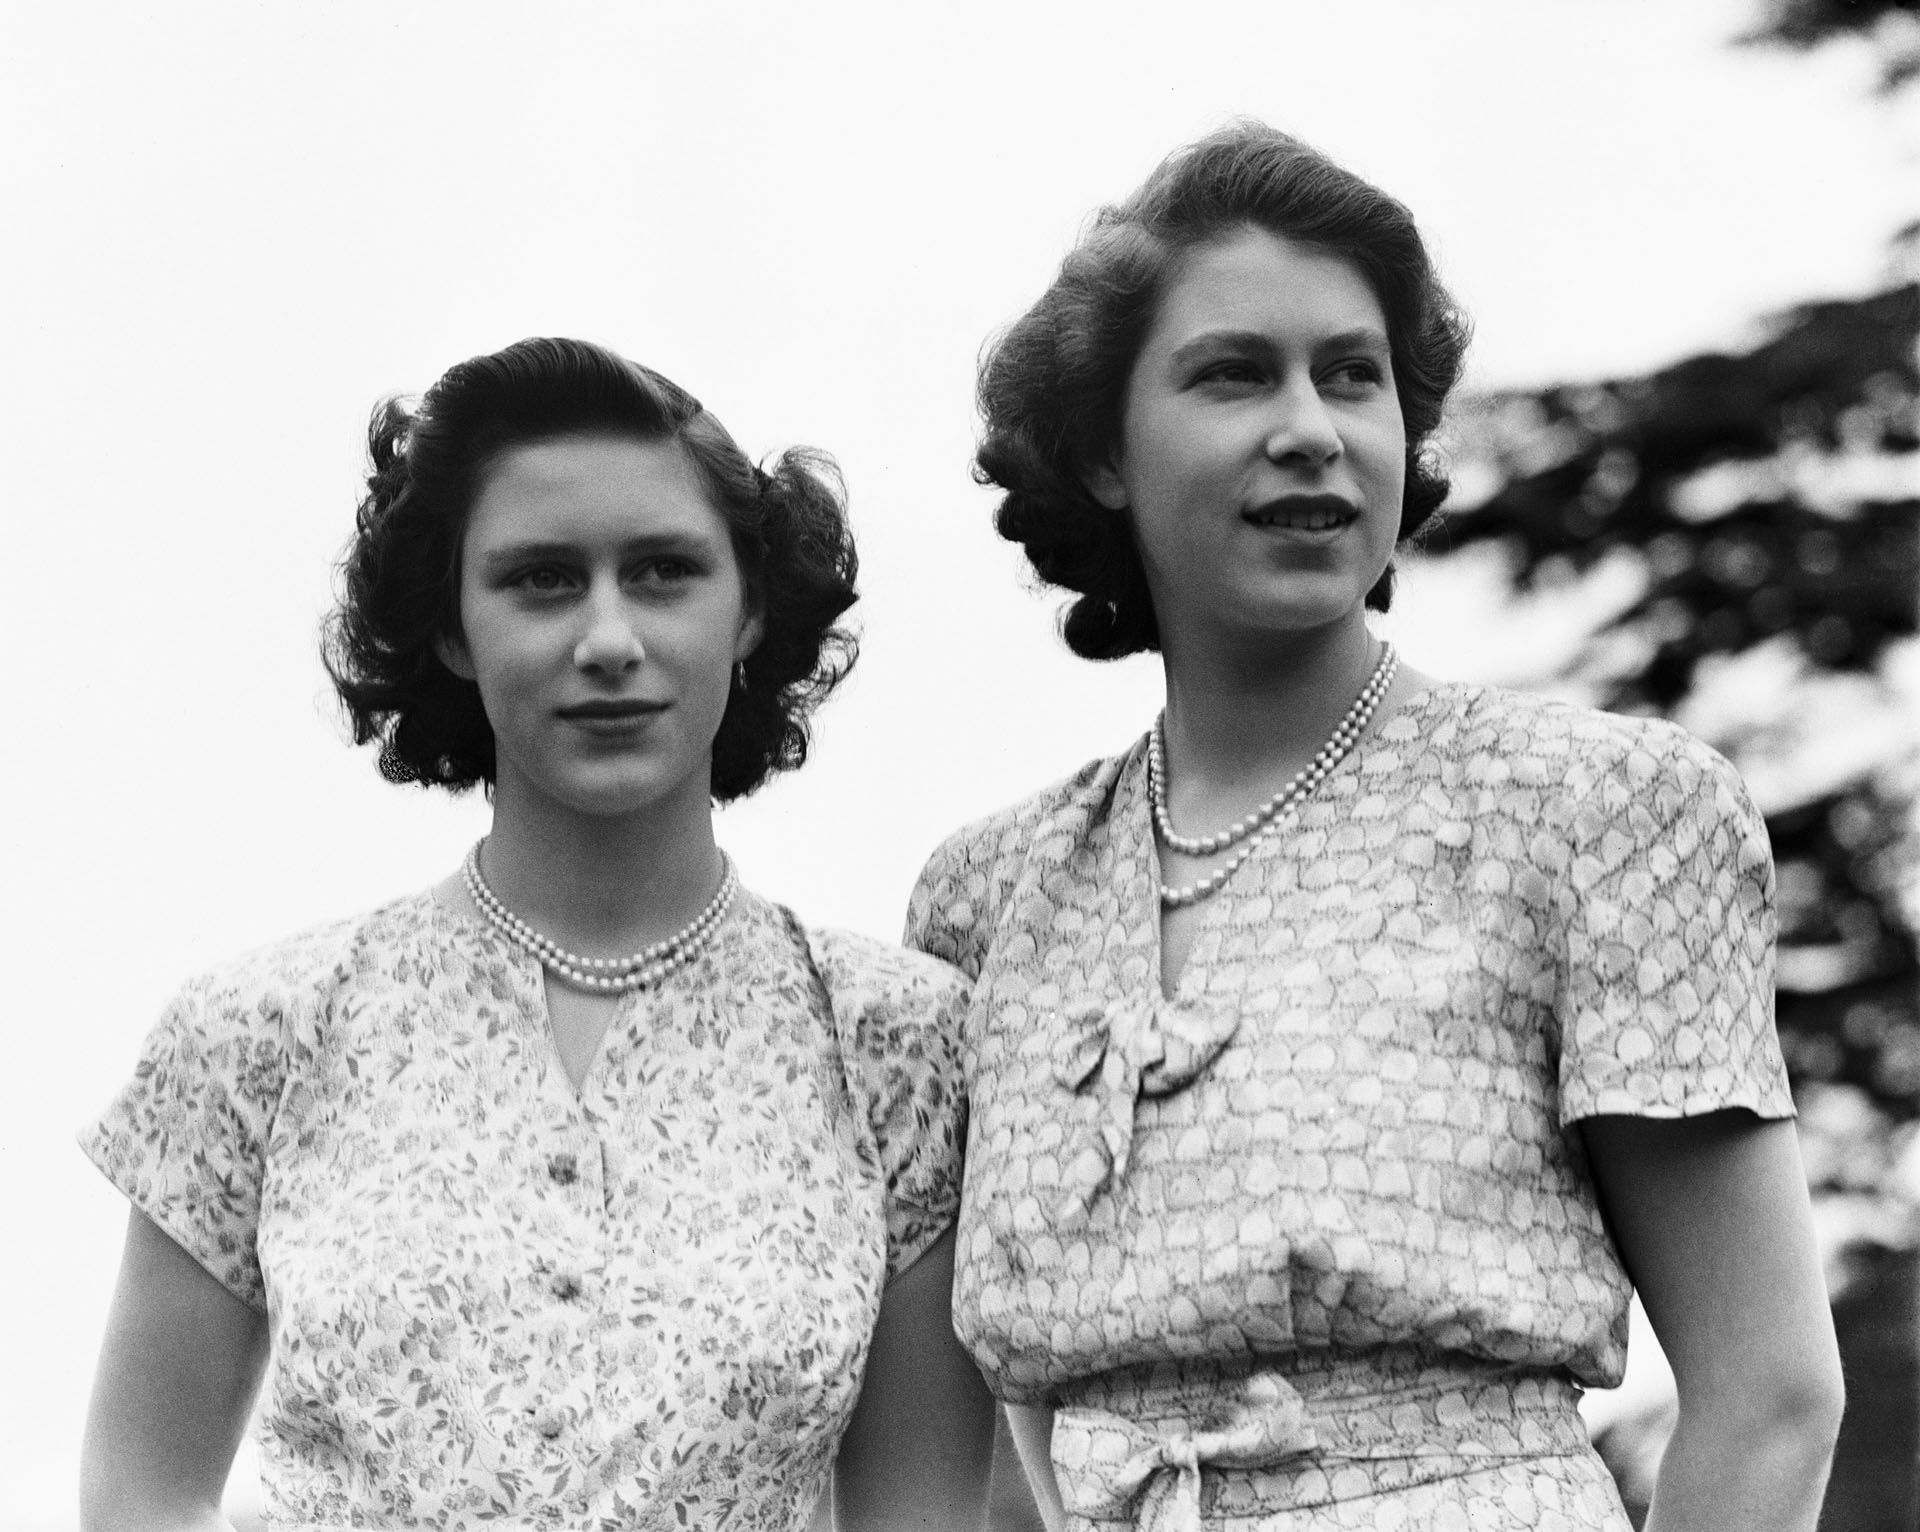 Princess Elizabeth and her sister Princess Margaret (1930 - 2002) at the Royal Lodge, Windsor, UK, 8th July 1946. (Photo by Lisa Sheridan/Hulton Archive/Getty Images)